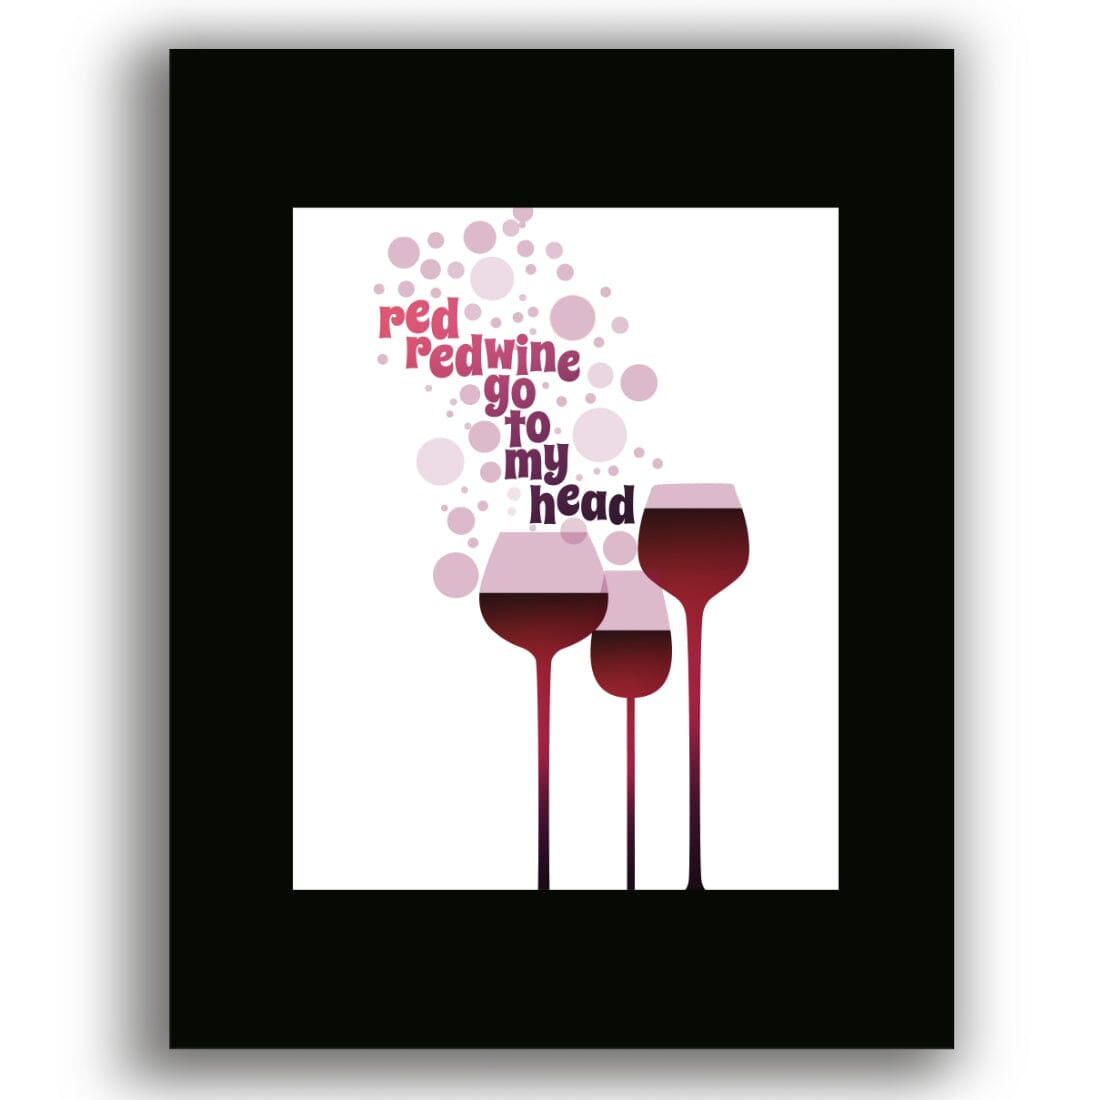 Red Red Wine by Neil Diamond - Music Quote Poster Art Song Lyrics Art Song Lyrics Art 8x10 Black Matted Print 